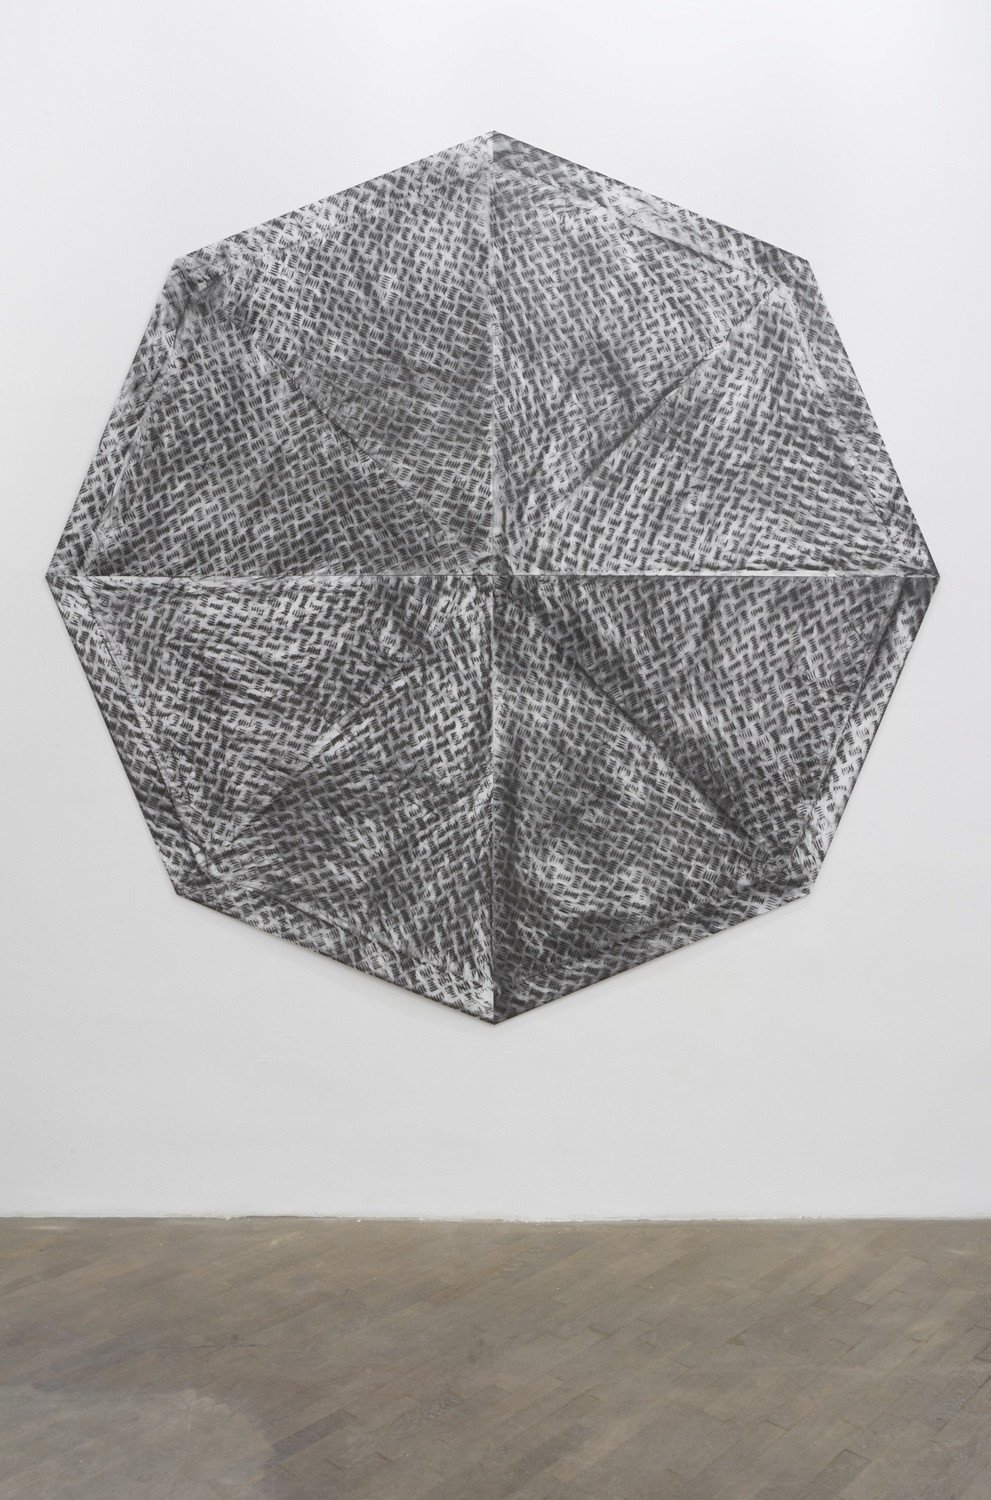 Marius EnghManhole, 2011Charcoal on paper on aluminium277 x 277 x 4 cm